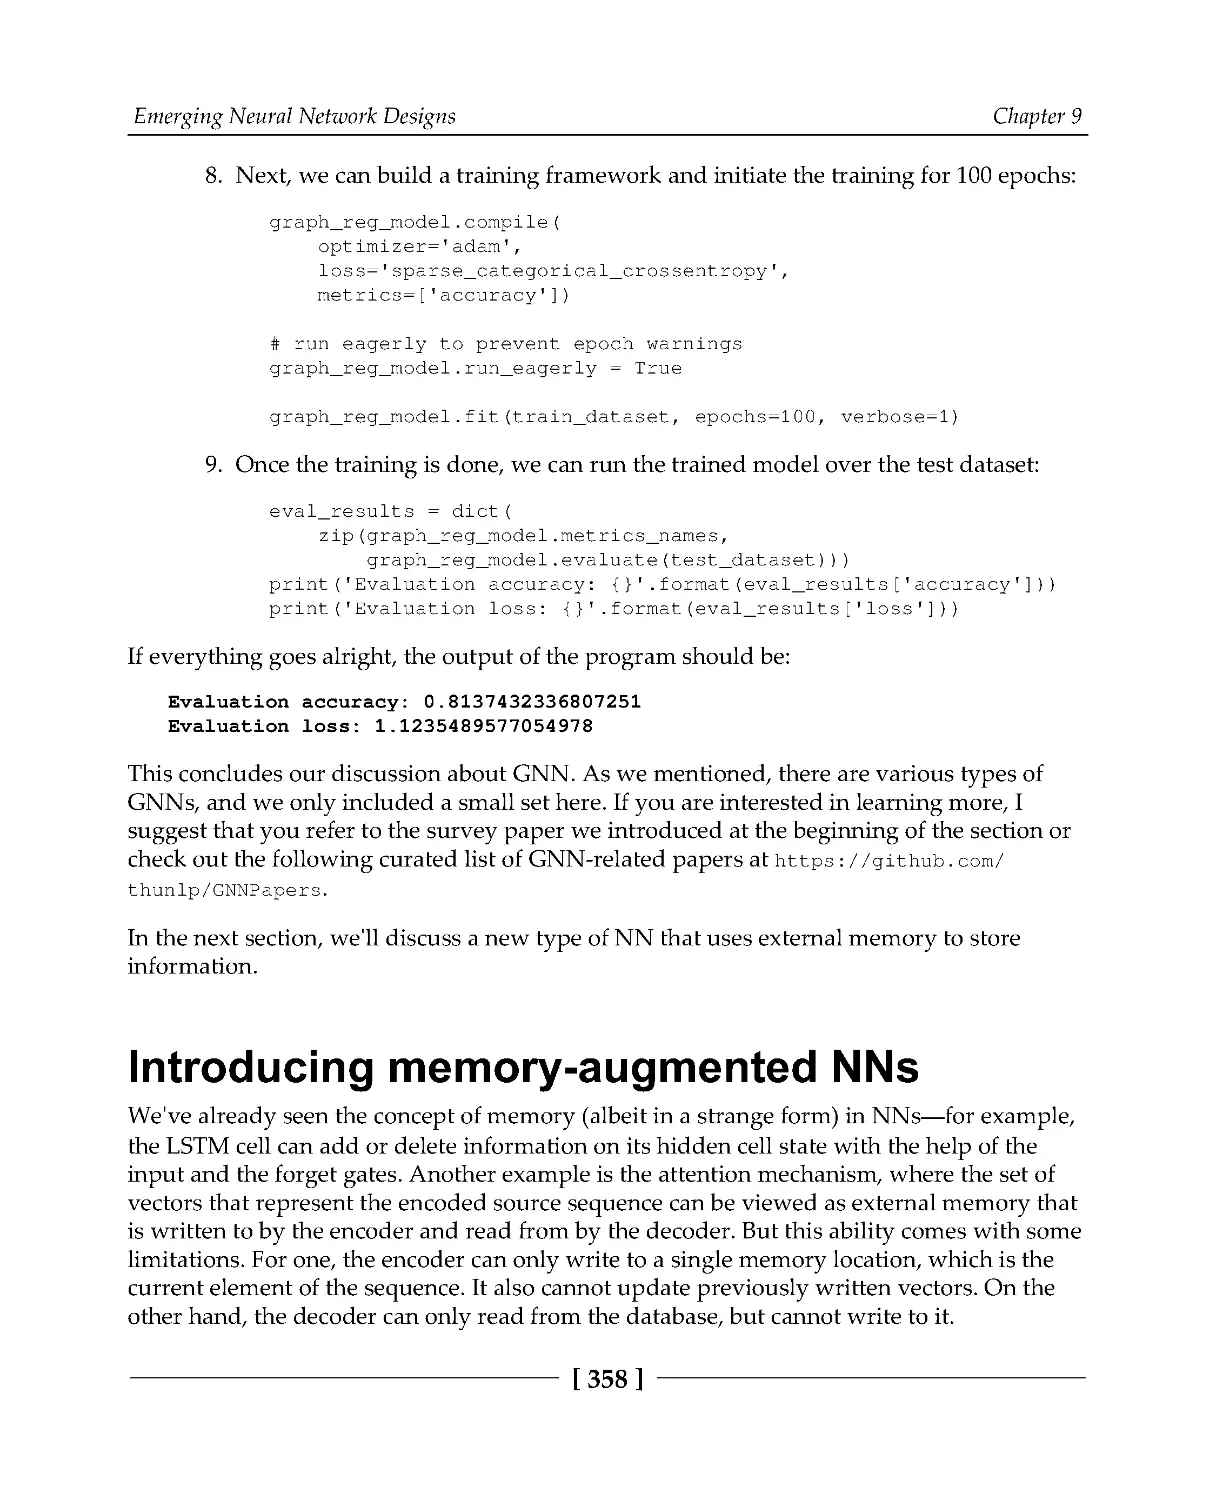 Introducing memory-augmented NNs